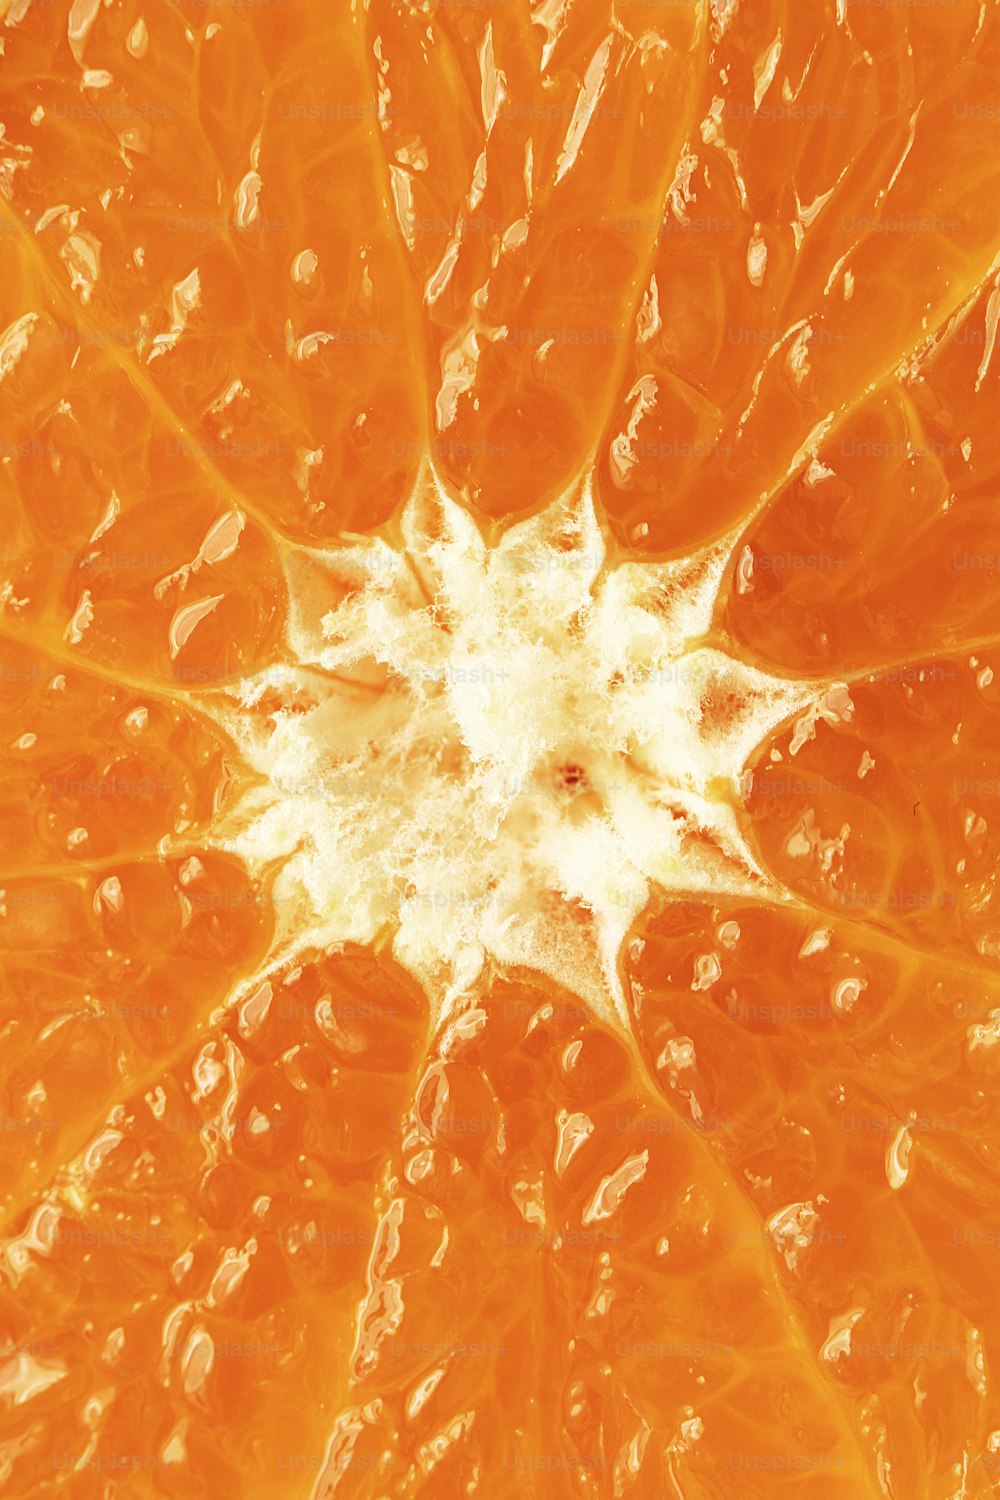 Un primer plano de una naranja con gotas de agua